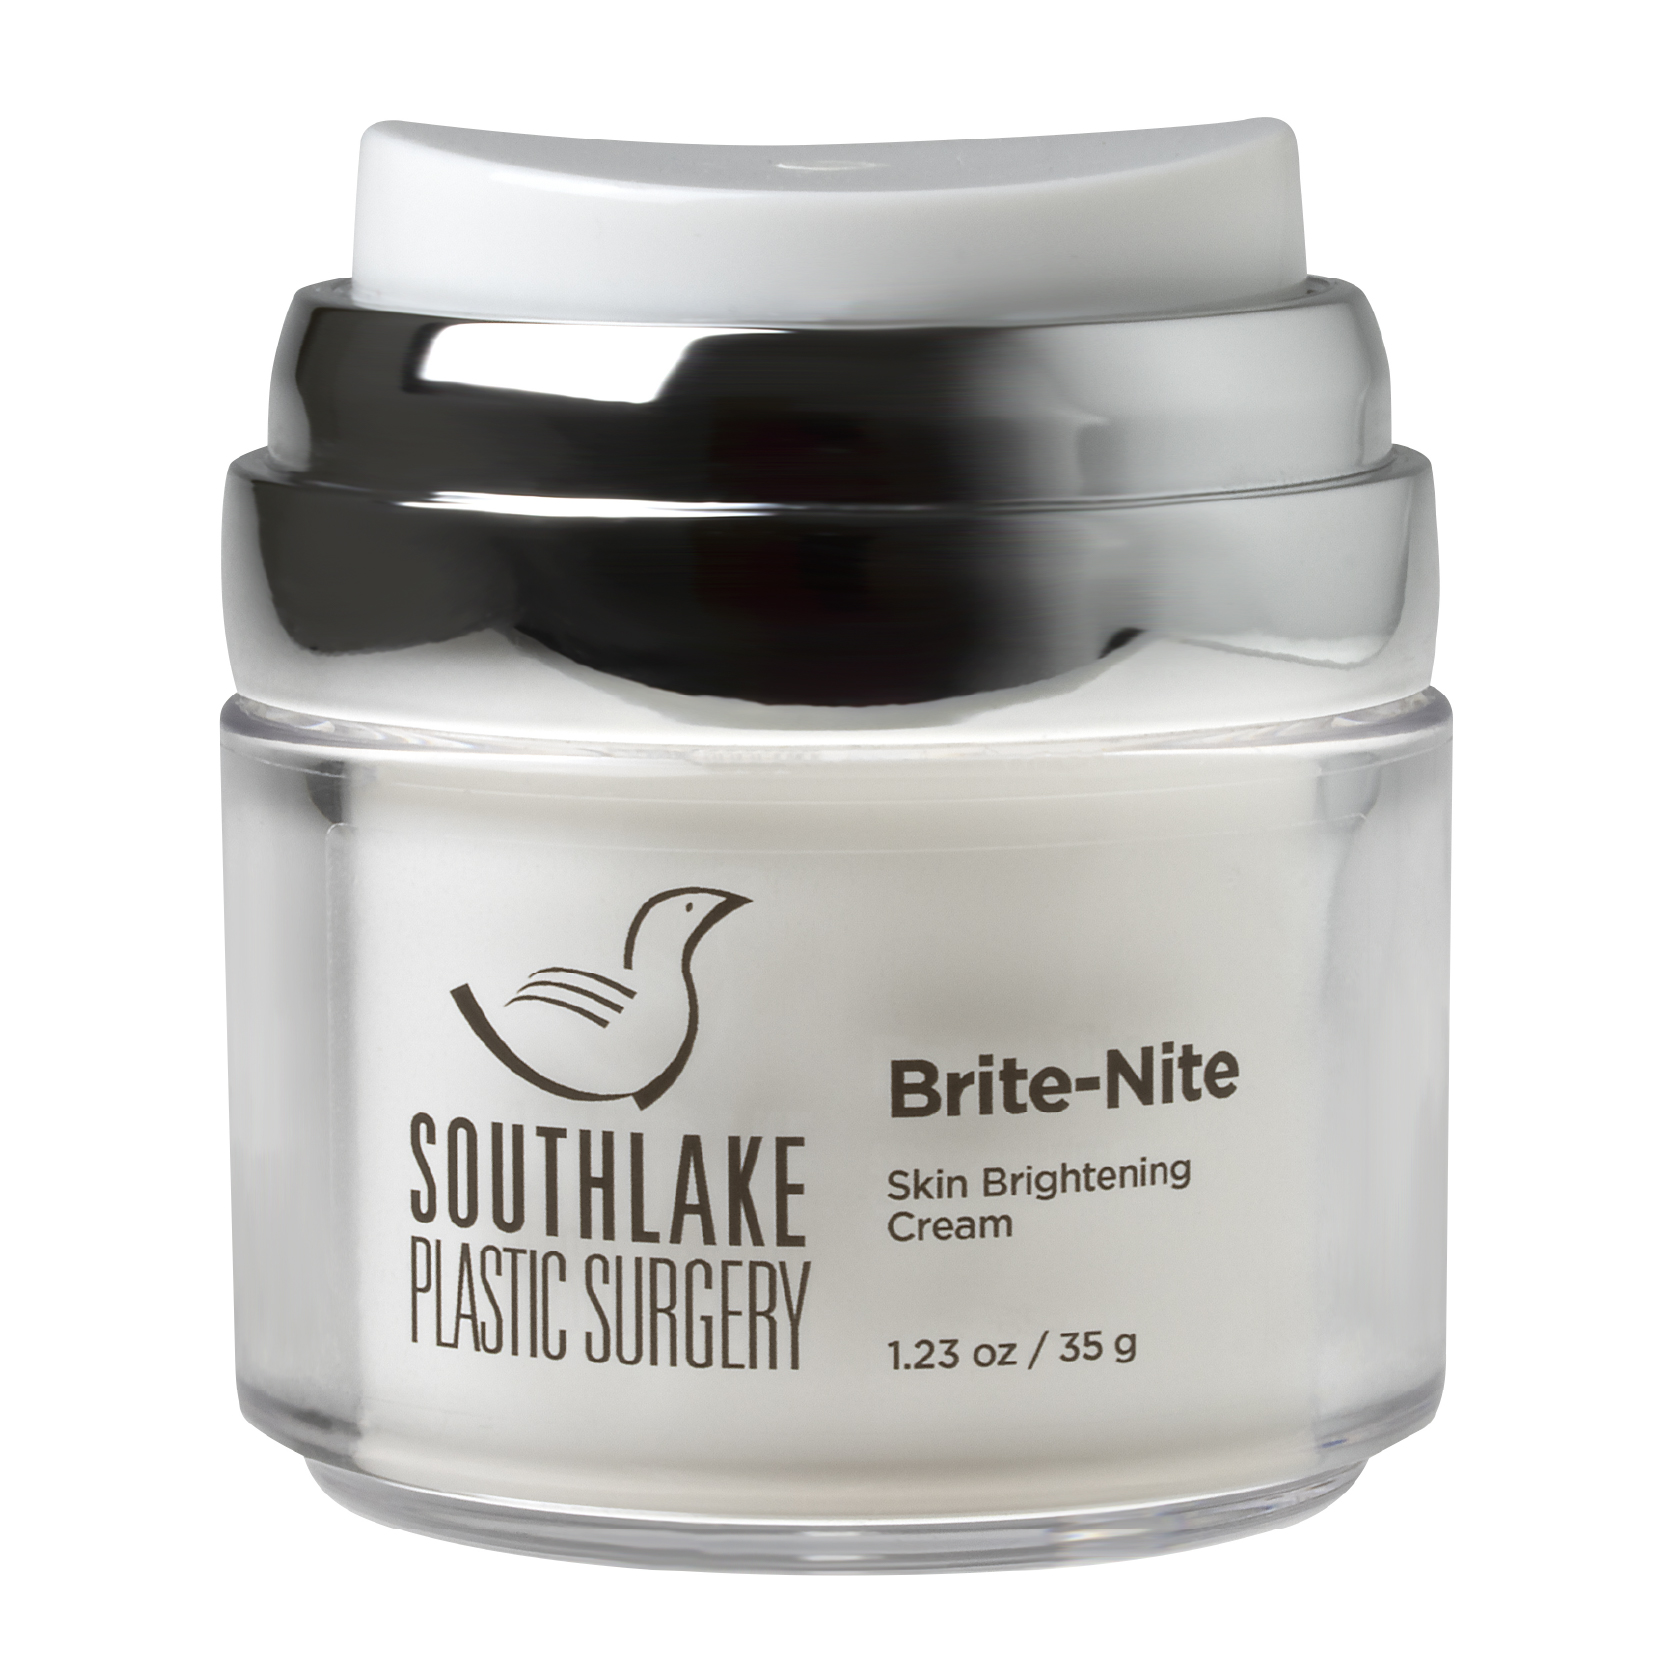 Brite-Nite Southlake product